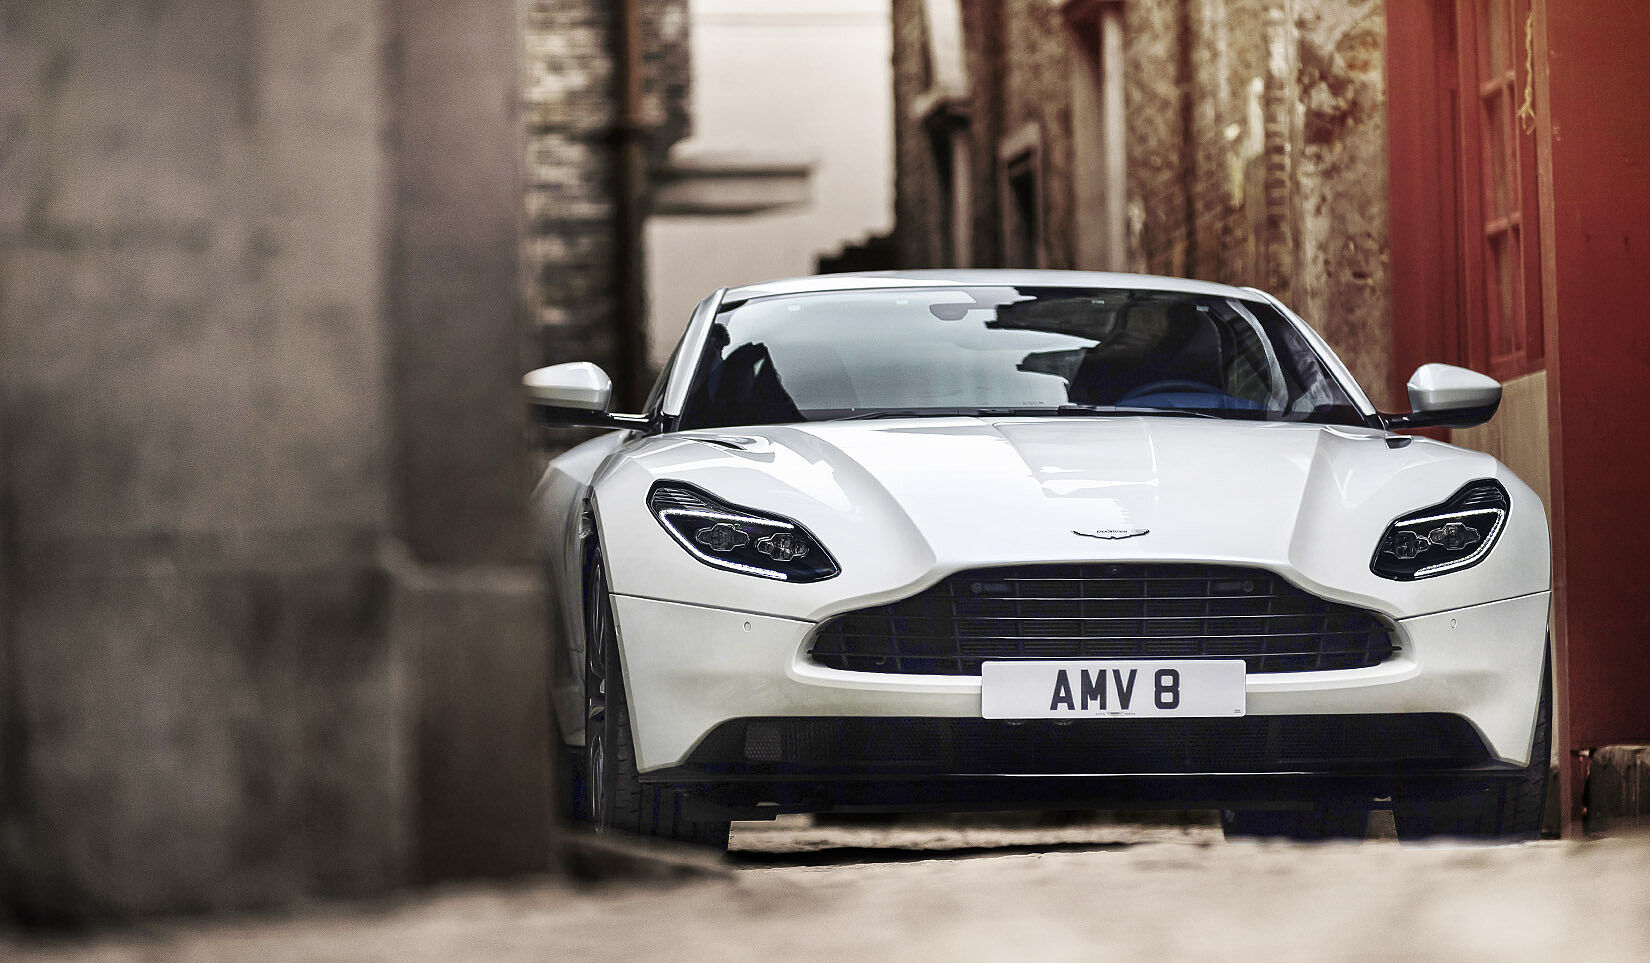 Aston Martin München: News & Events